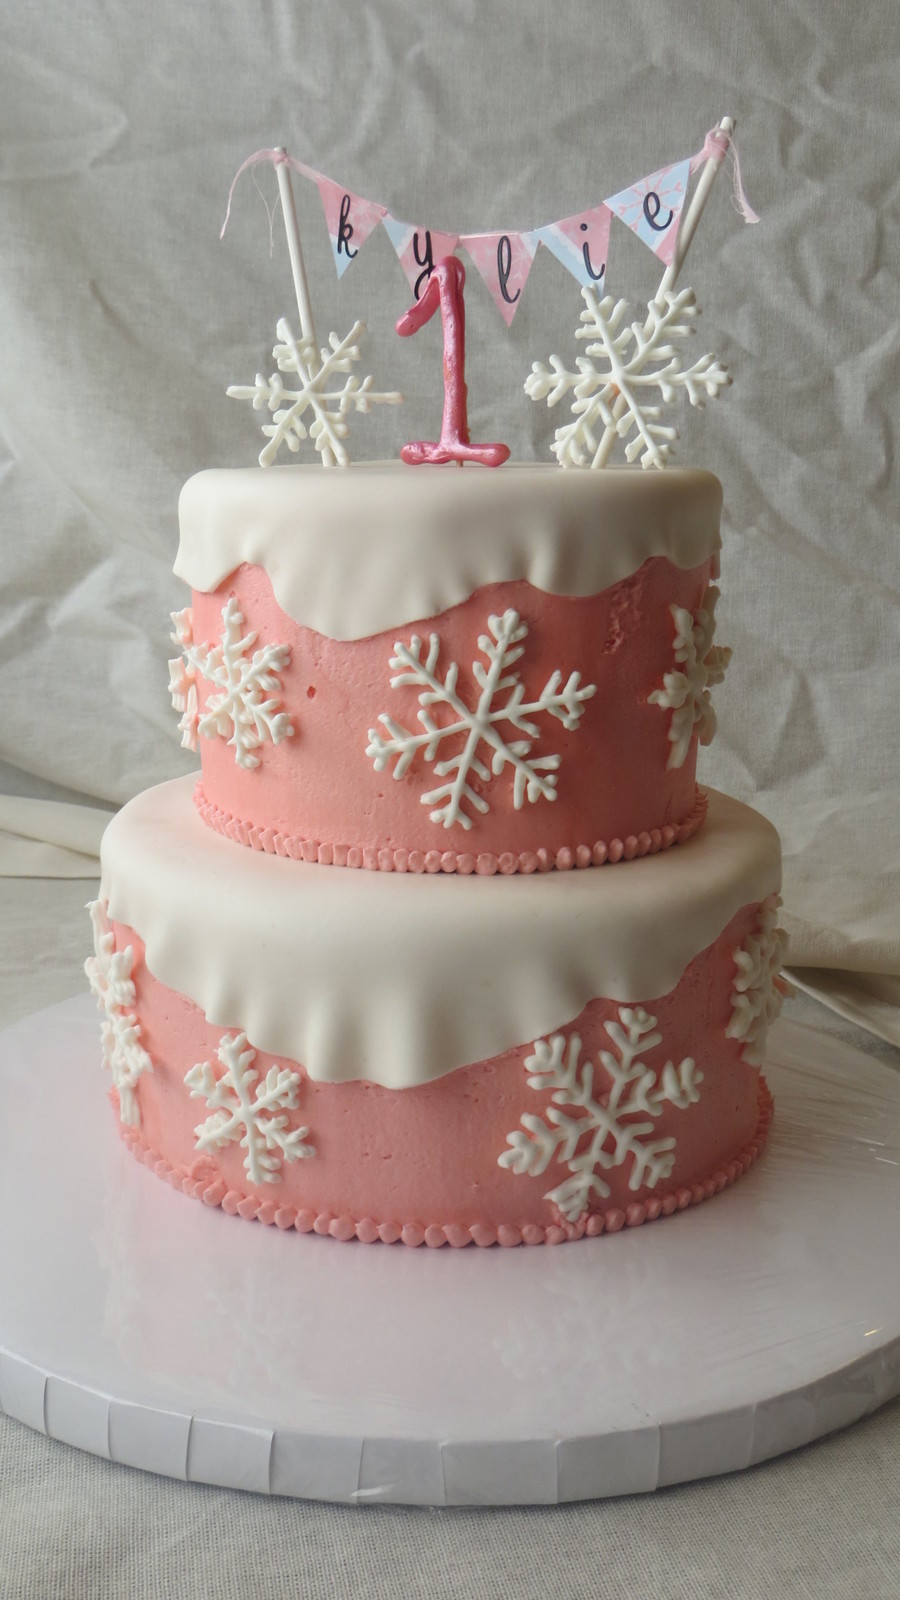 Winter Wonderland Birthday Cake
 Winter ederland Cake Royal Icing Snowflakes Buttercream